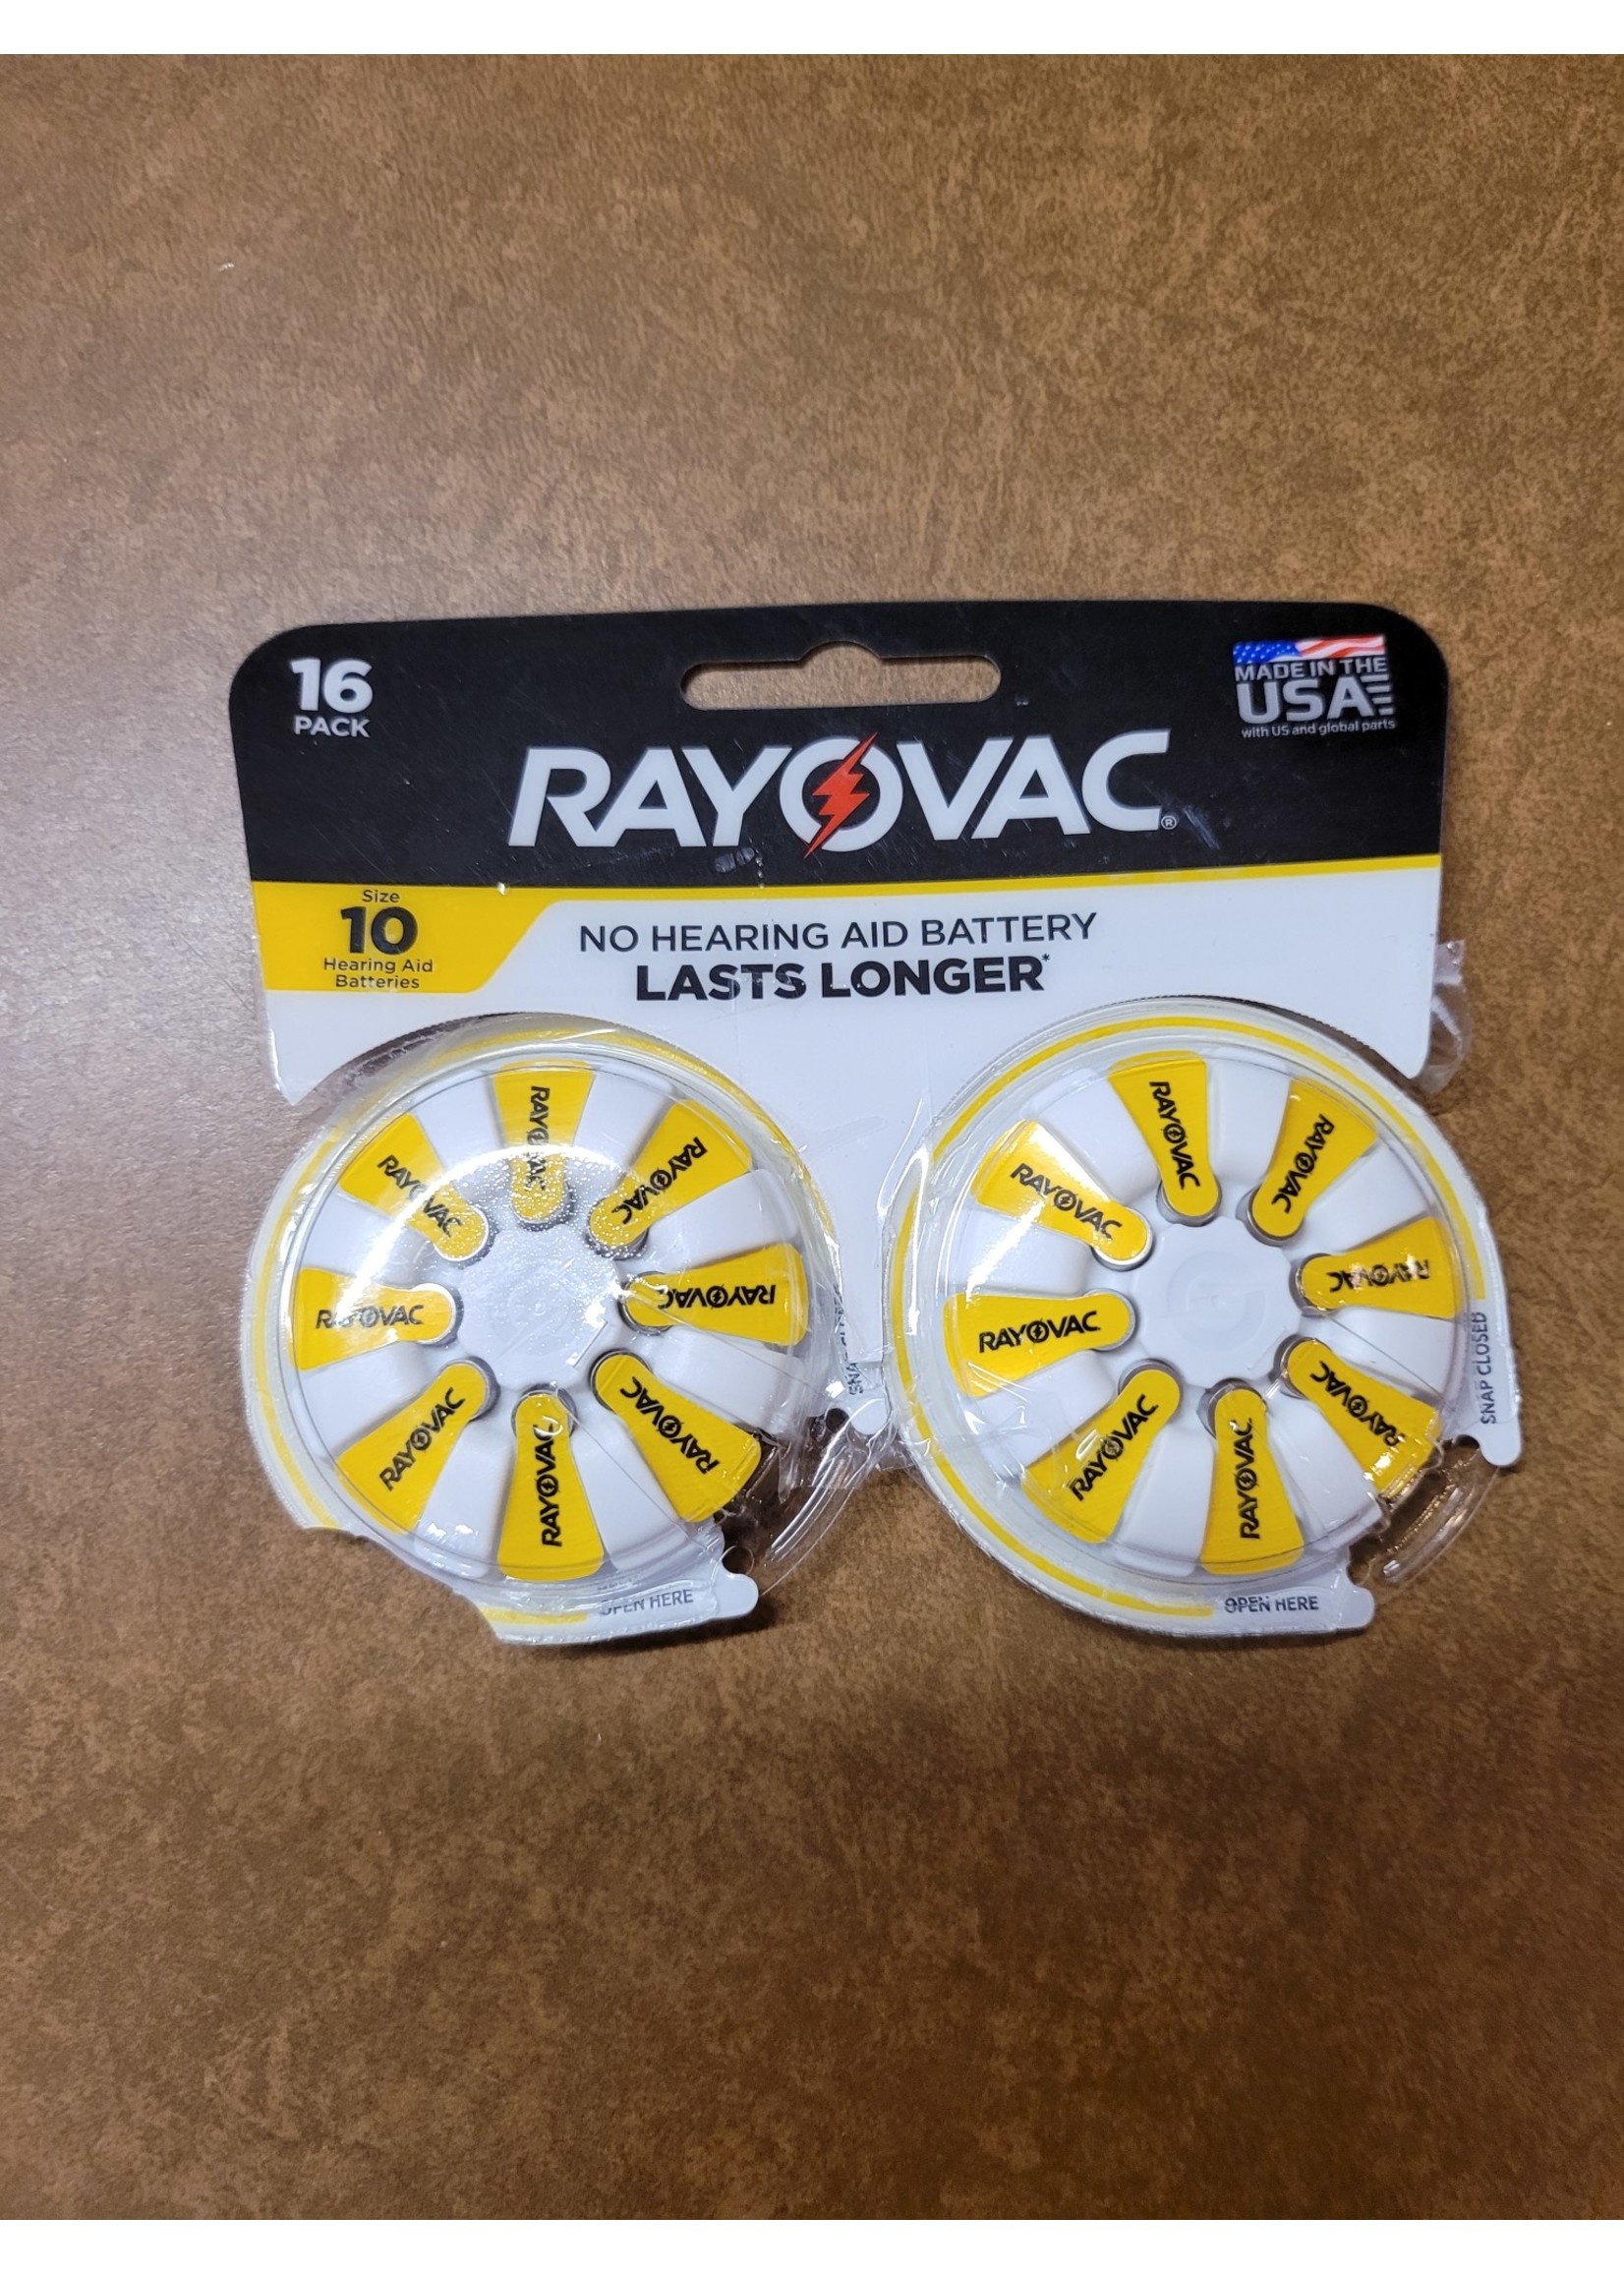 Rayovac Size 10 Hearing Aid Battery - 16pk